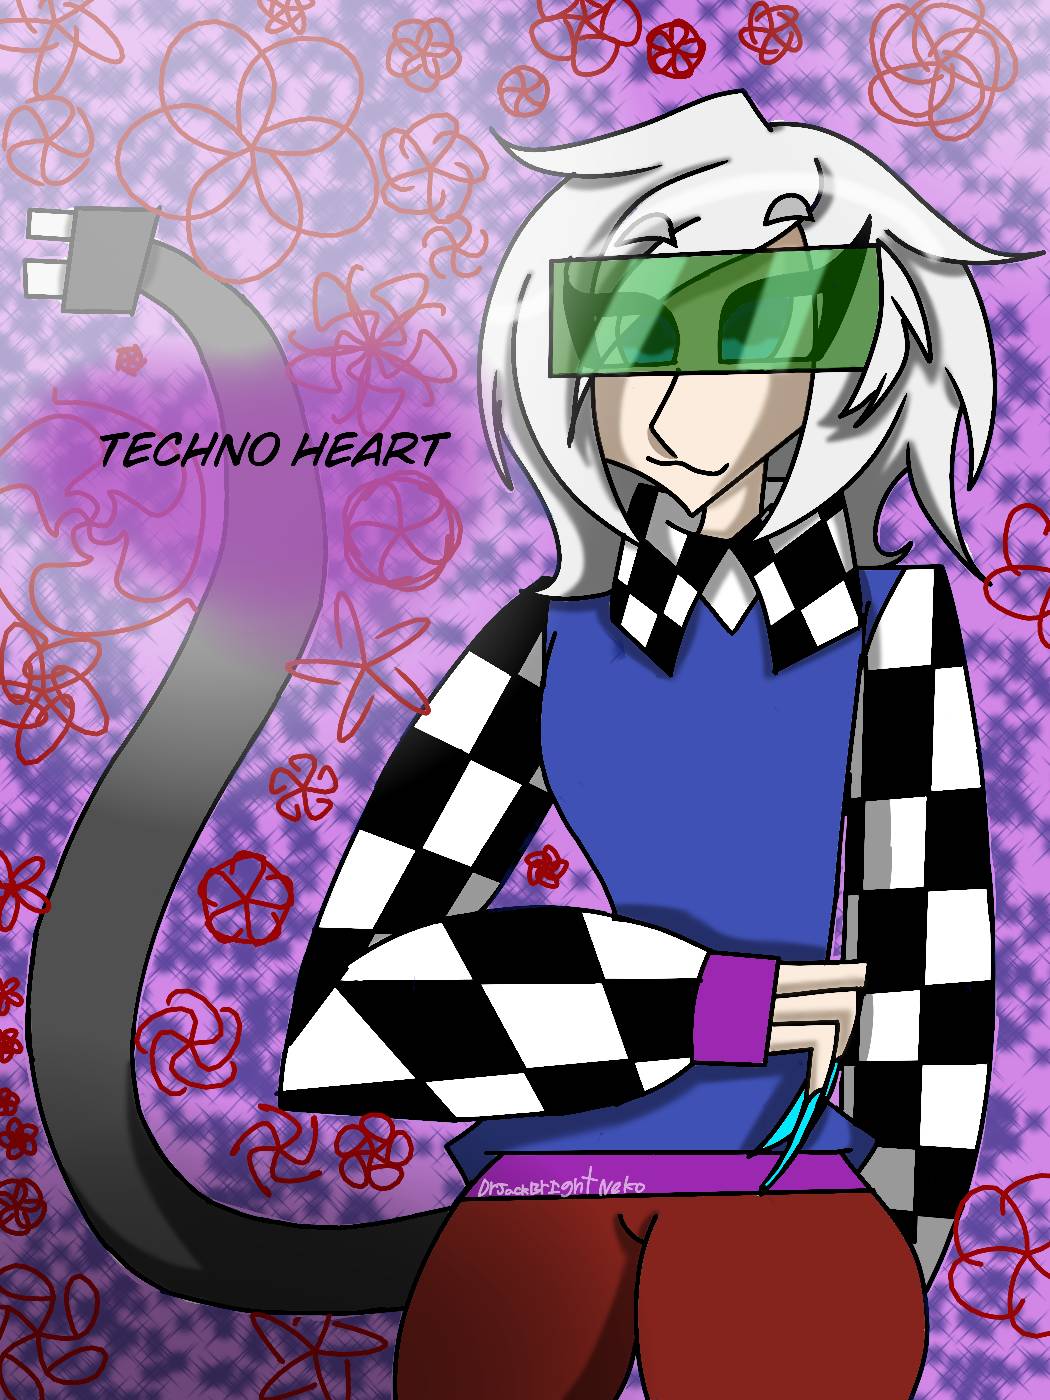 Scp 7148 Techno Heart by DrJackBrightNeko on DeviantArt